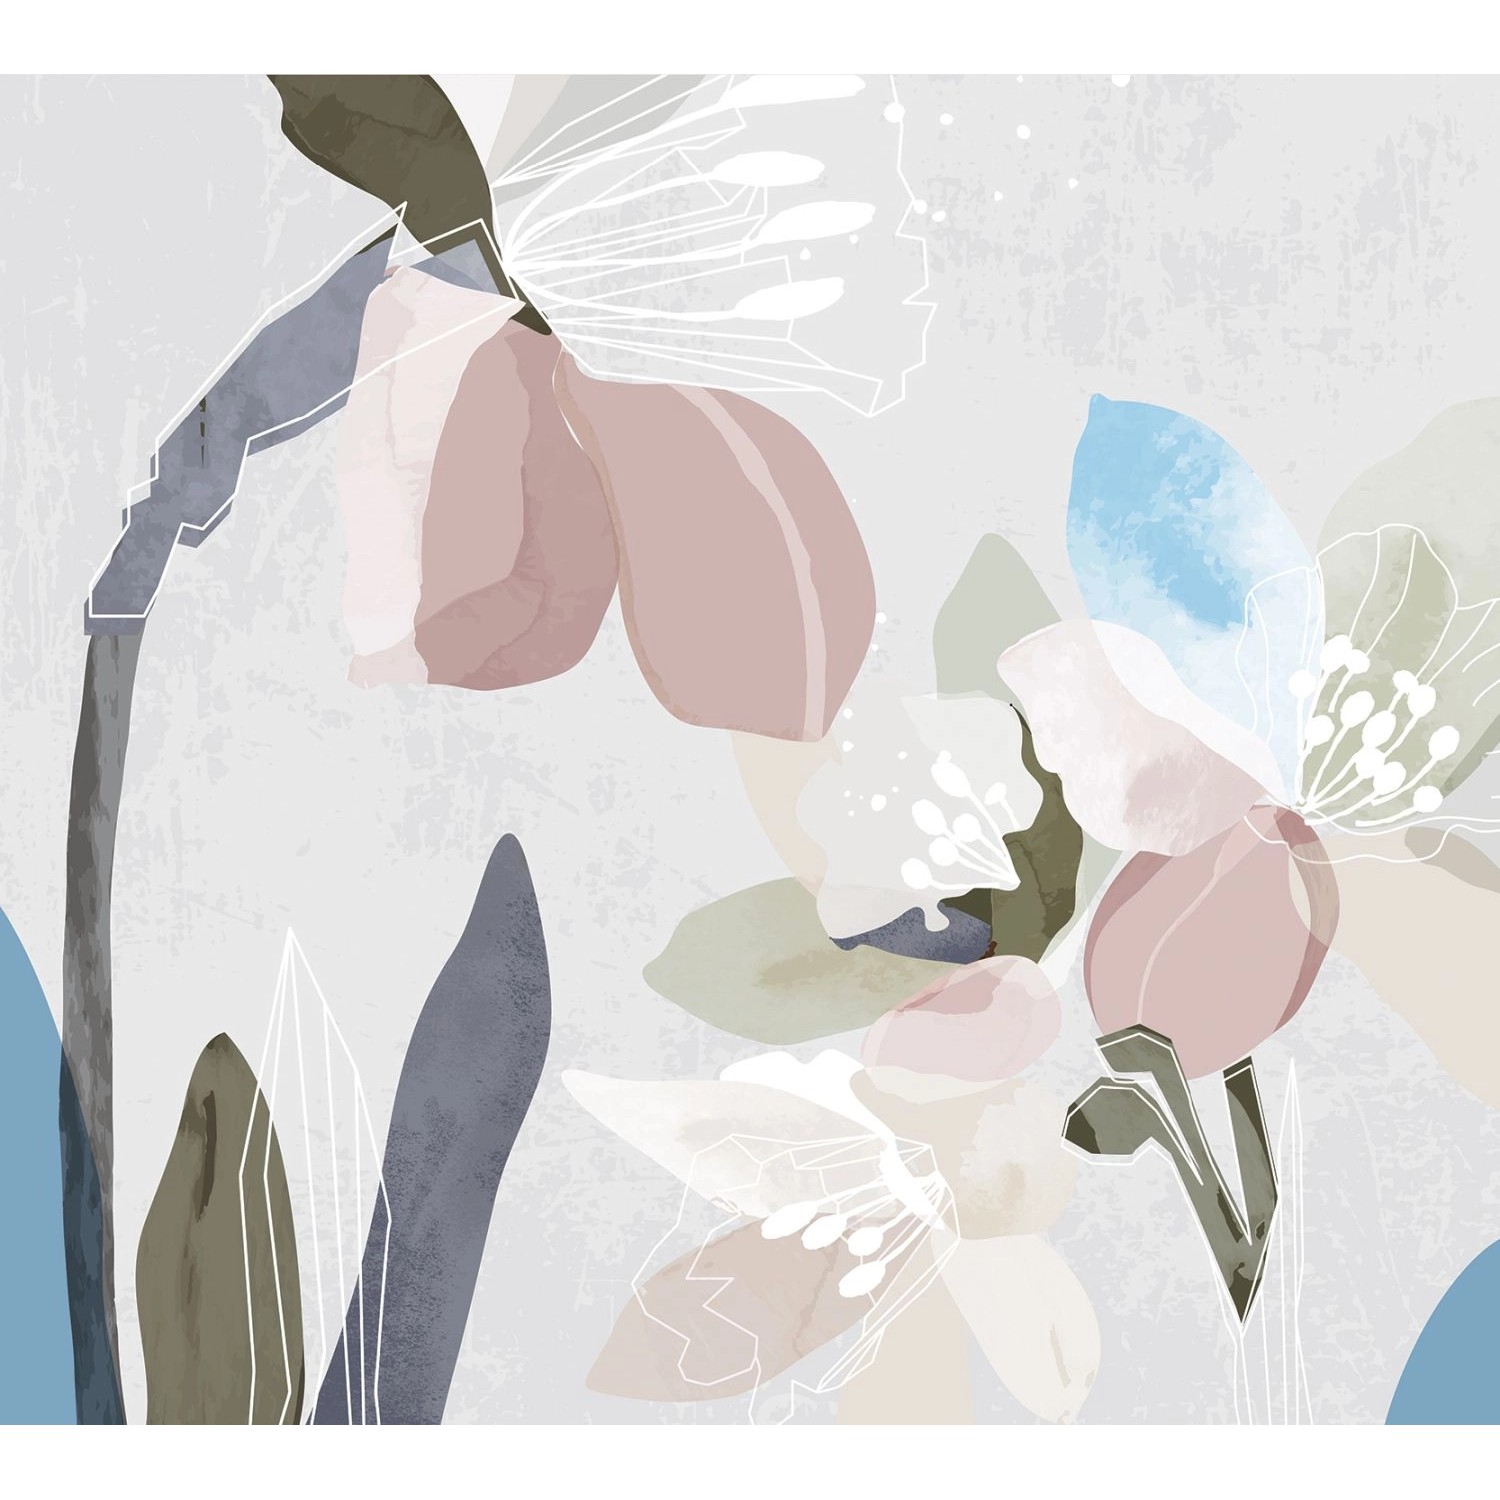 Sanders & Sanders Fototapete Blumenmuster Grau Rosa und Blau 3 x 2,7 m 6011 günstig online kaufen